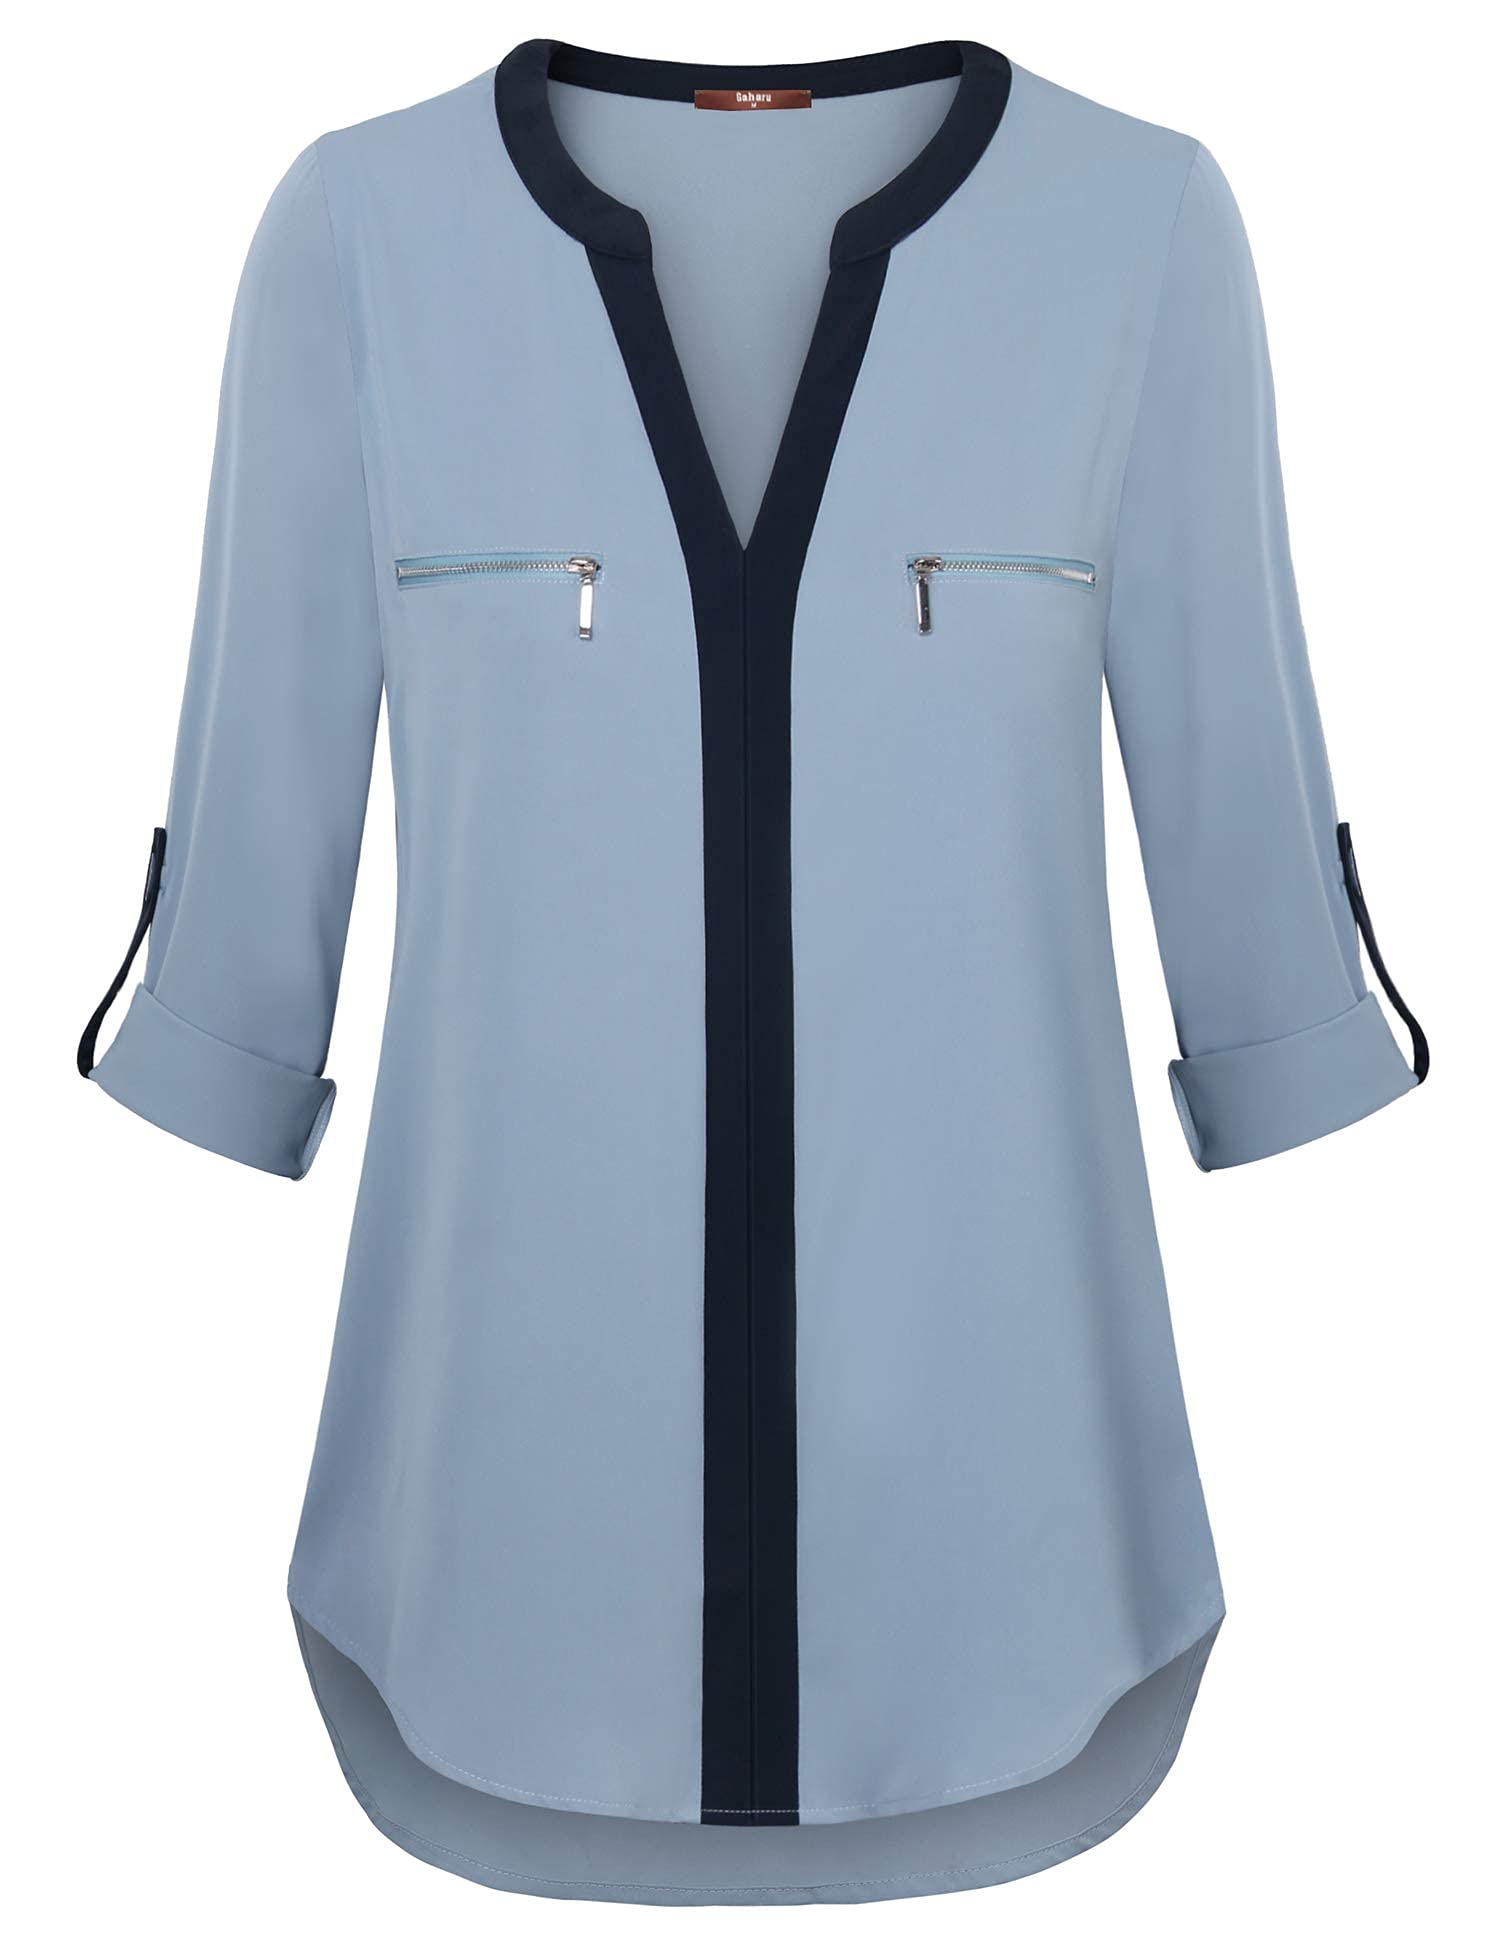 Gaharu Women's Casaul 3/4 Sleeve Shirts Tops V Neck Chiffon Blouses